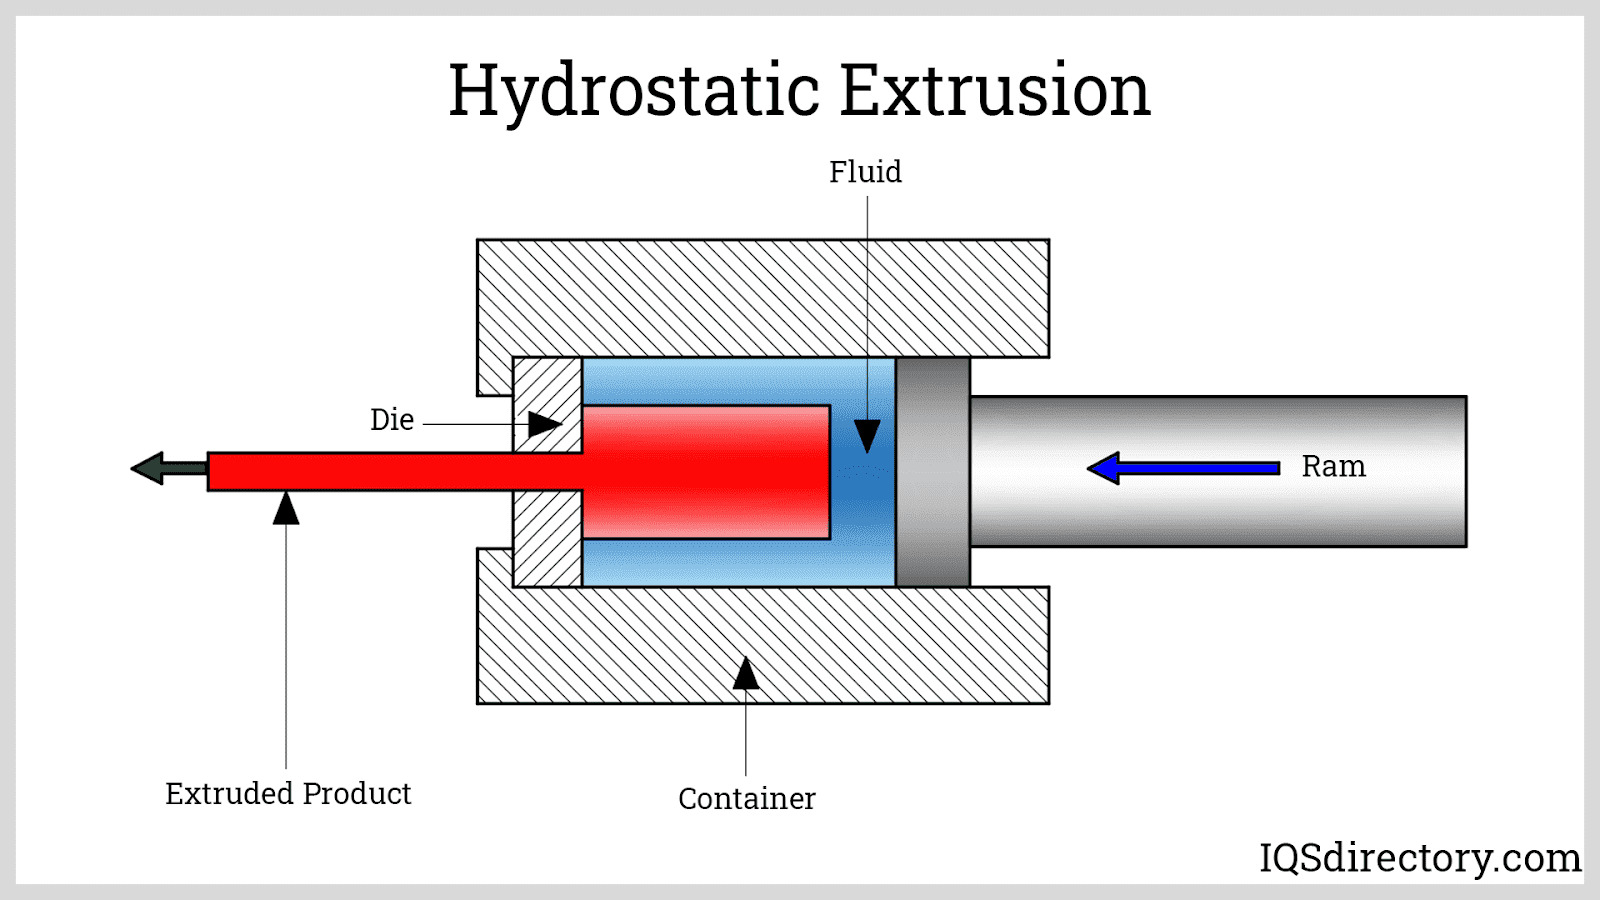 Hydrostatic Extrusion